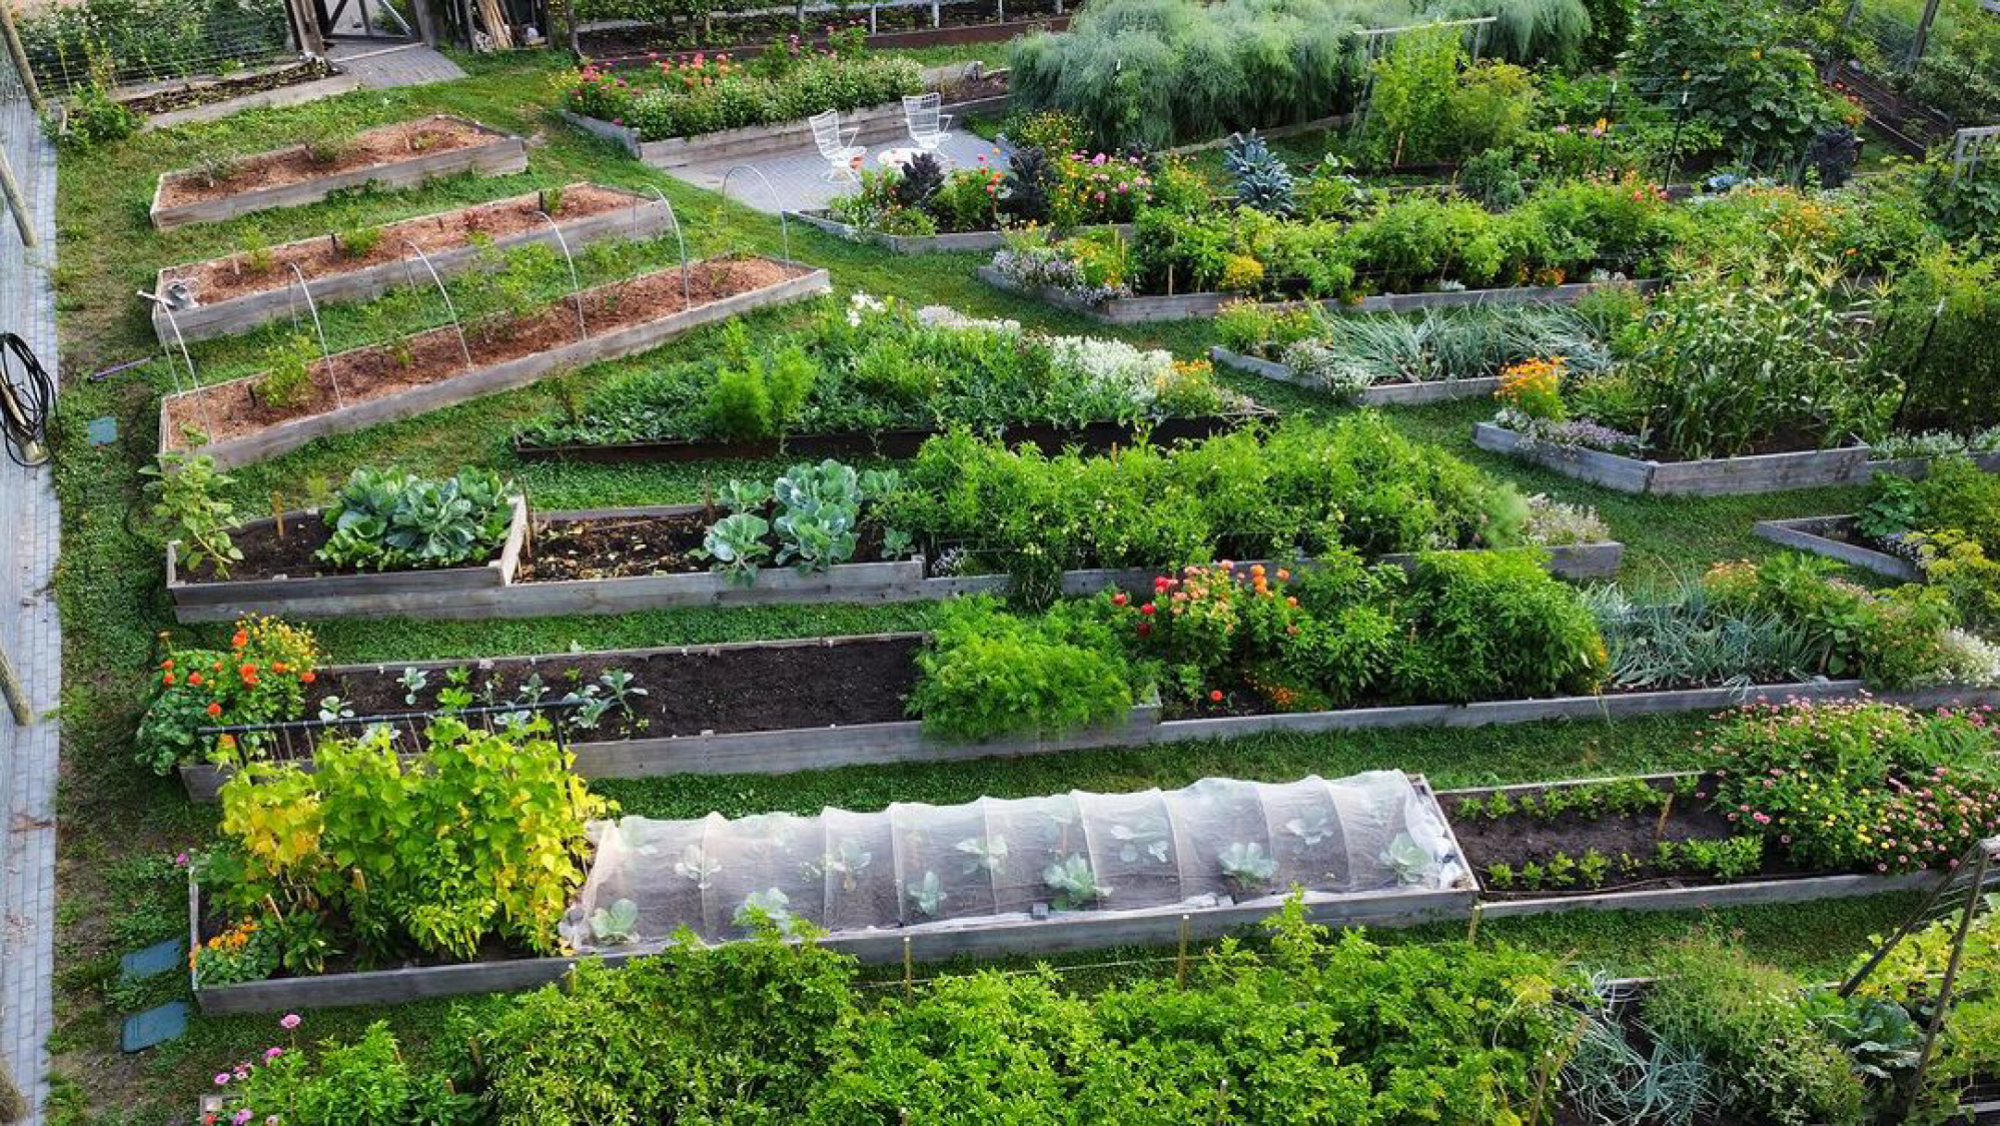 Meg Cowden's garden using block gardening